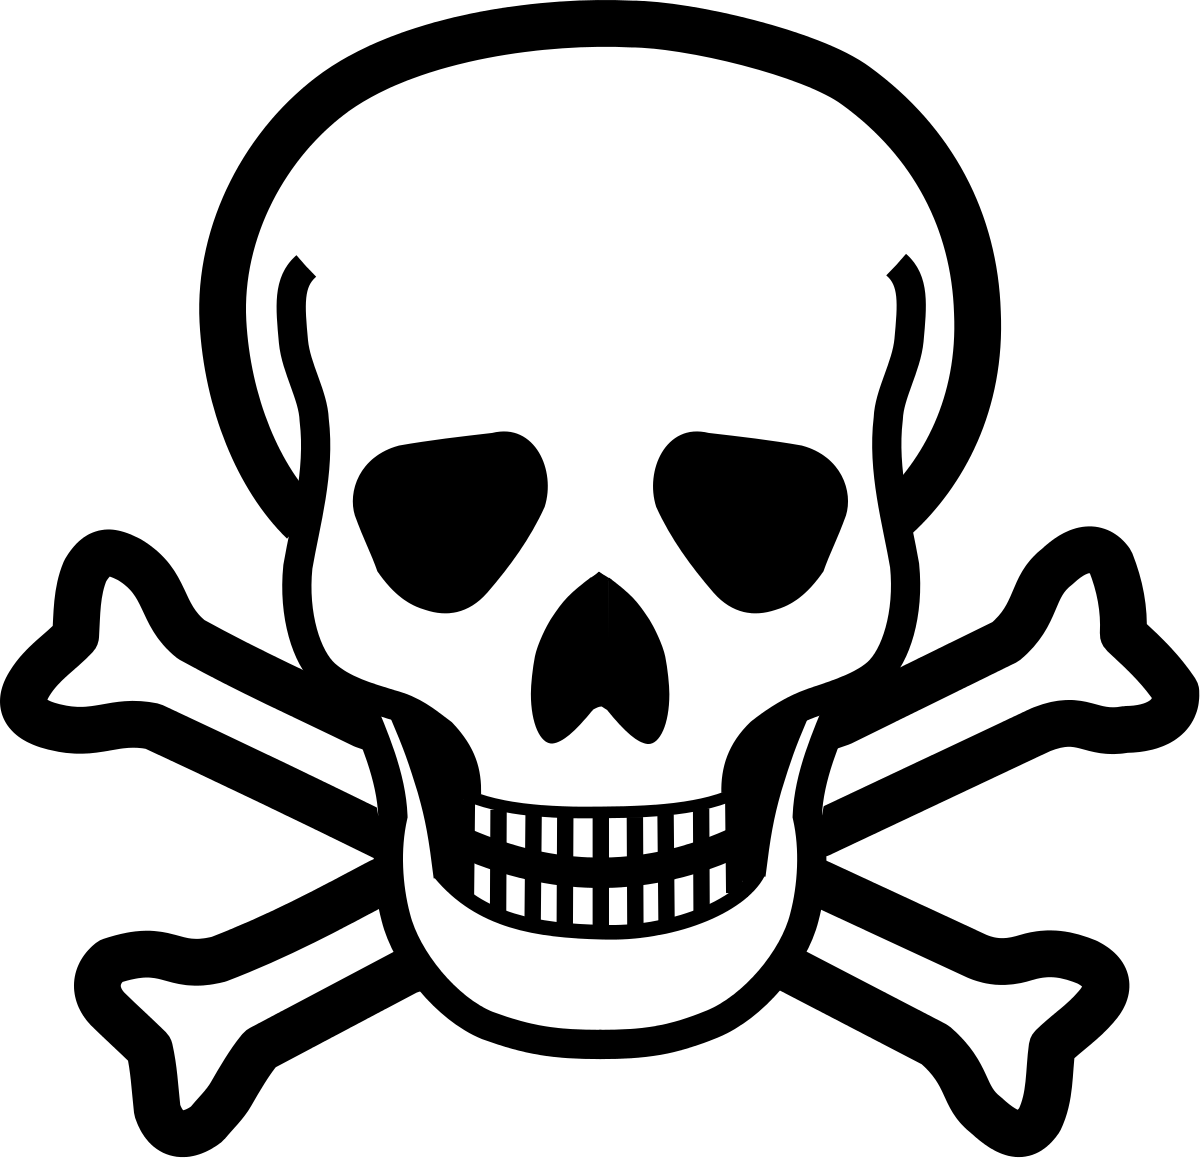 Download File:Skull & crossbones.svg - Wikipedia